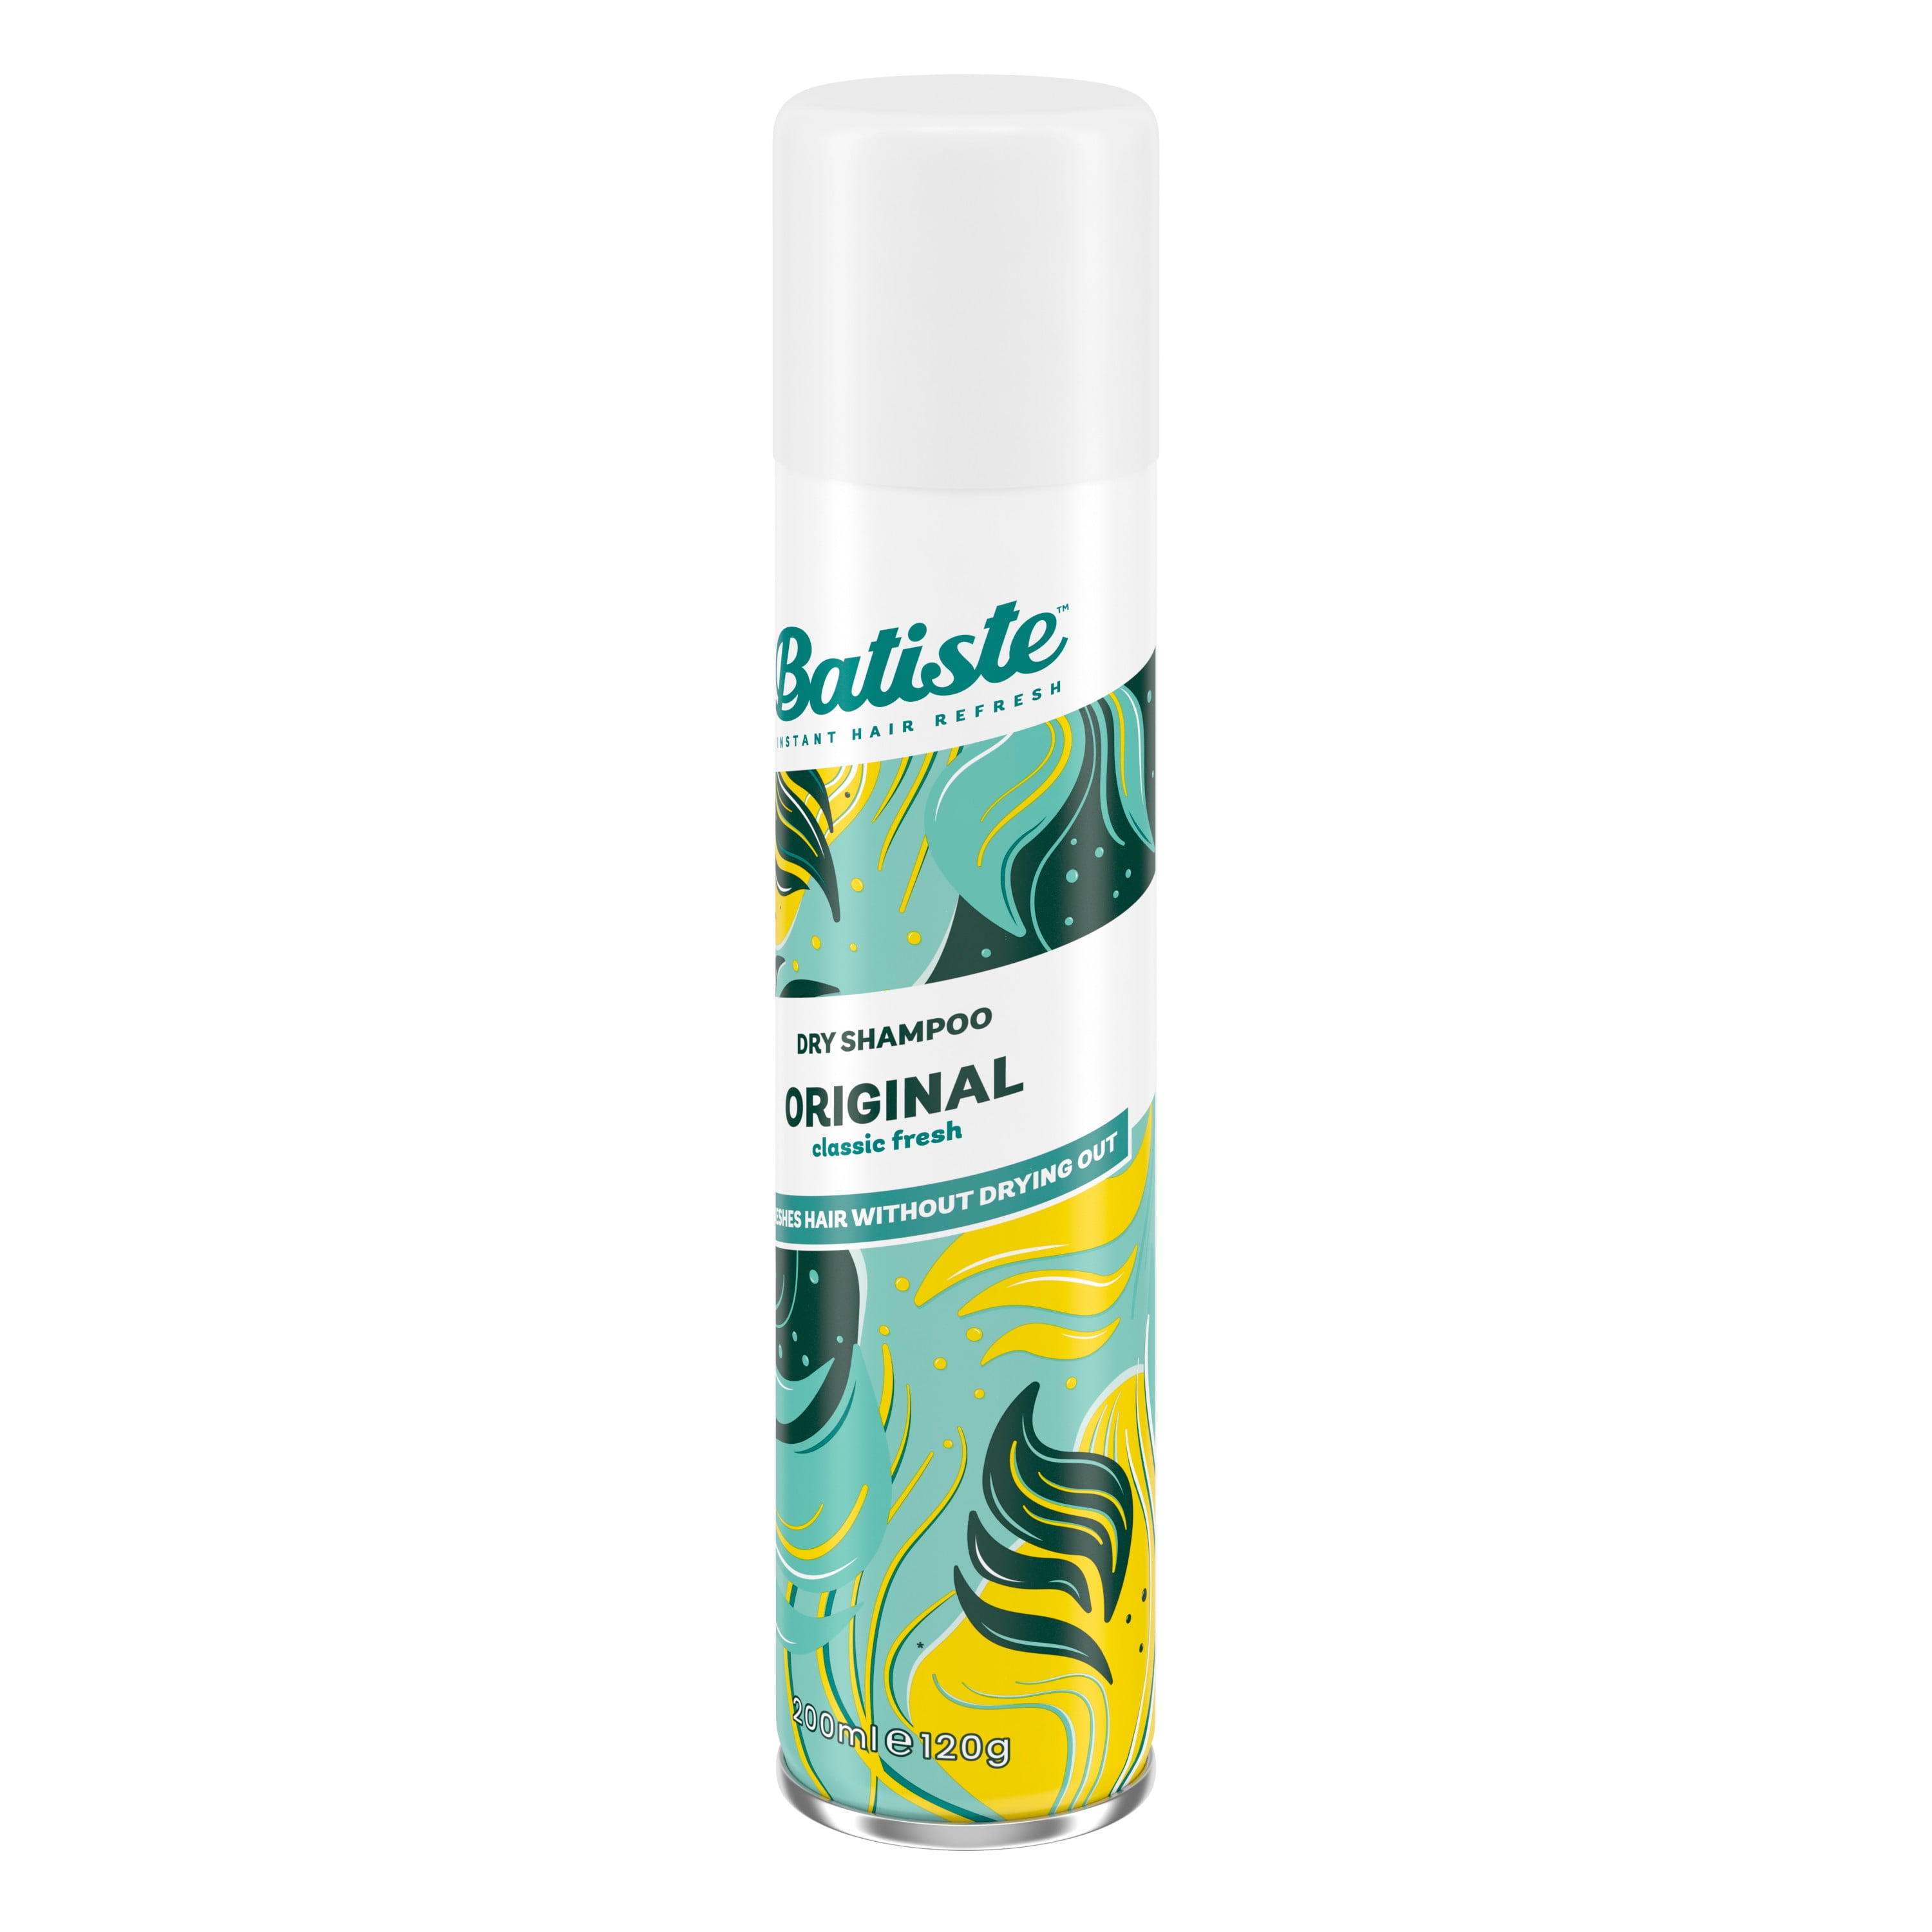 Batiste Dry Shampoo, Original Fragrance, 4.23 oz - Packaging May Vary